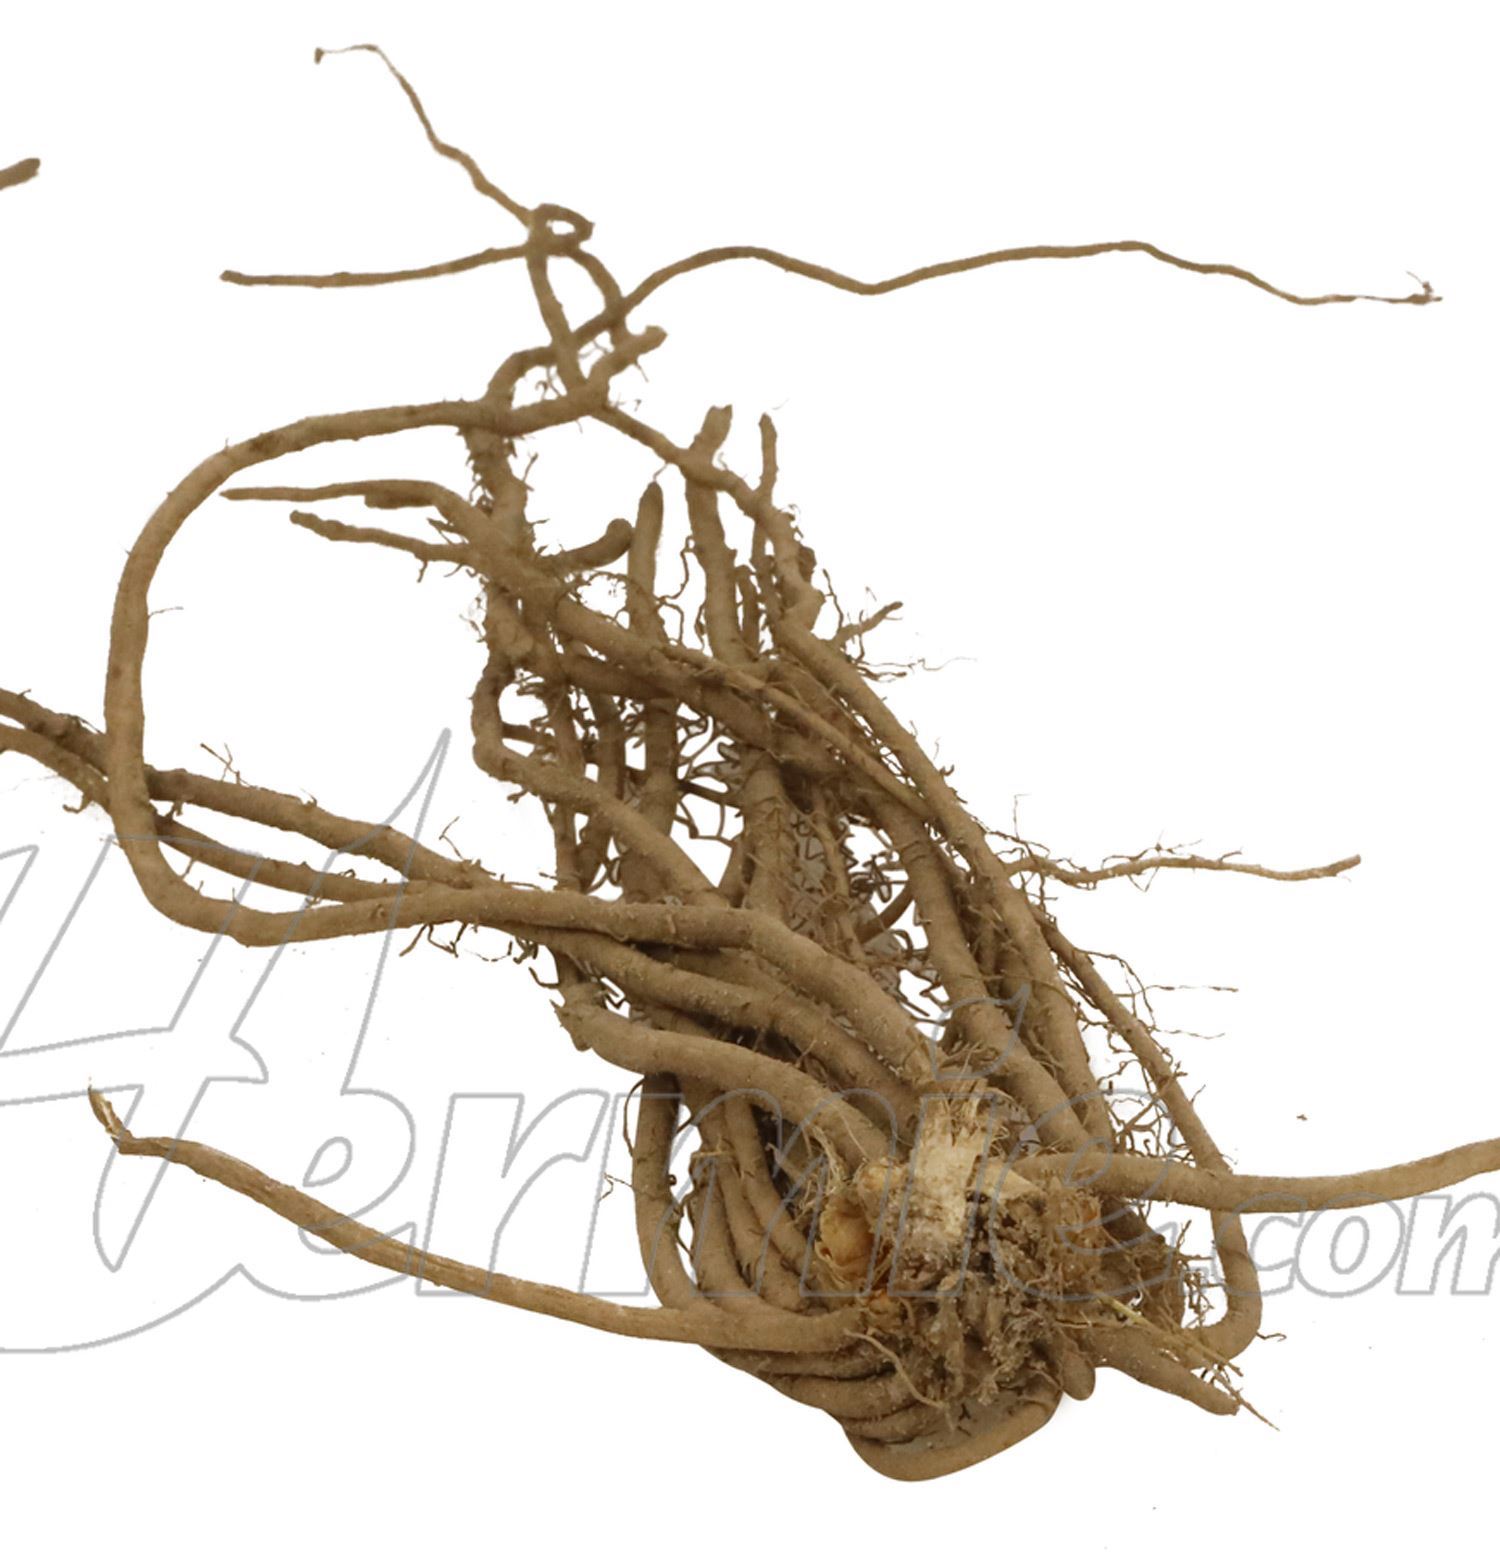 Asparagus roots annual 'Voltaire' - set of 10 plants